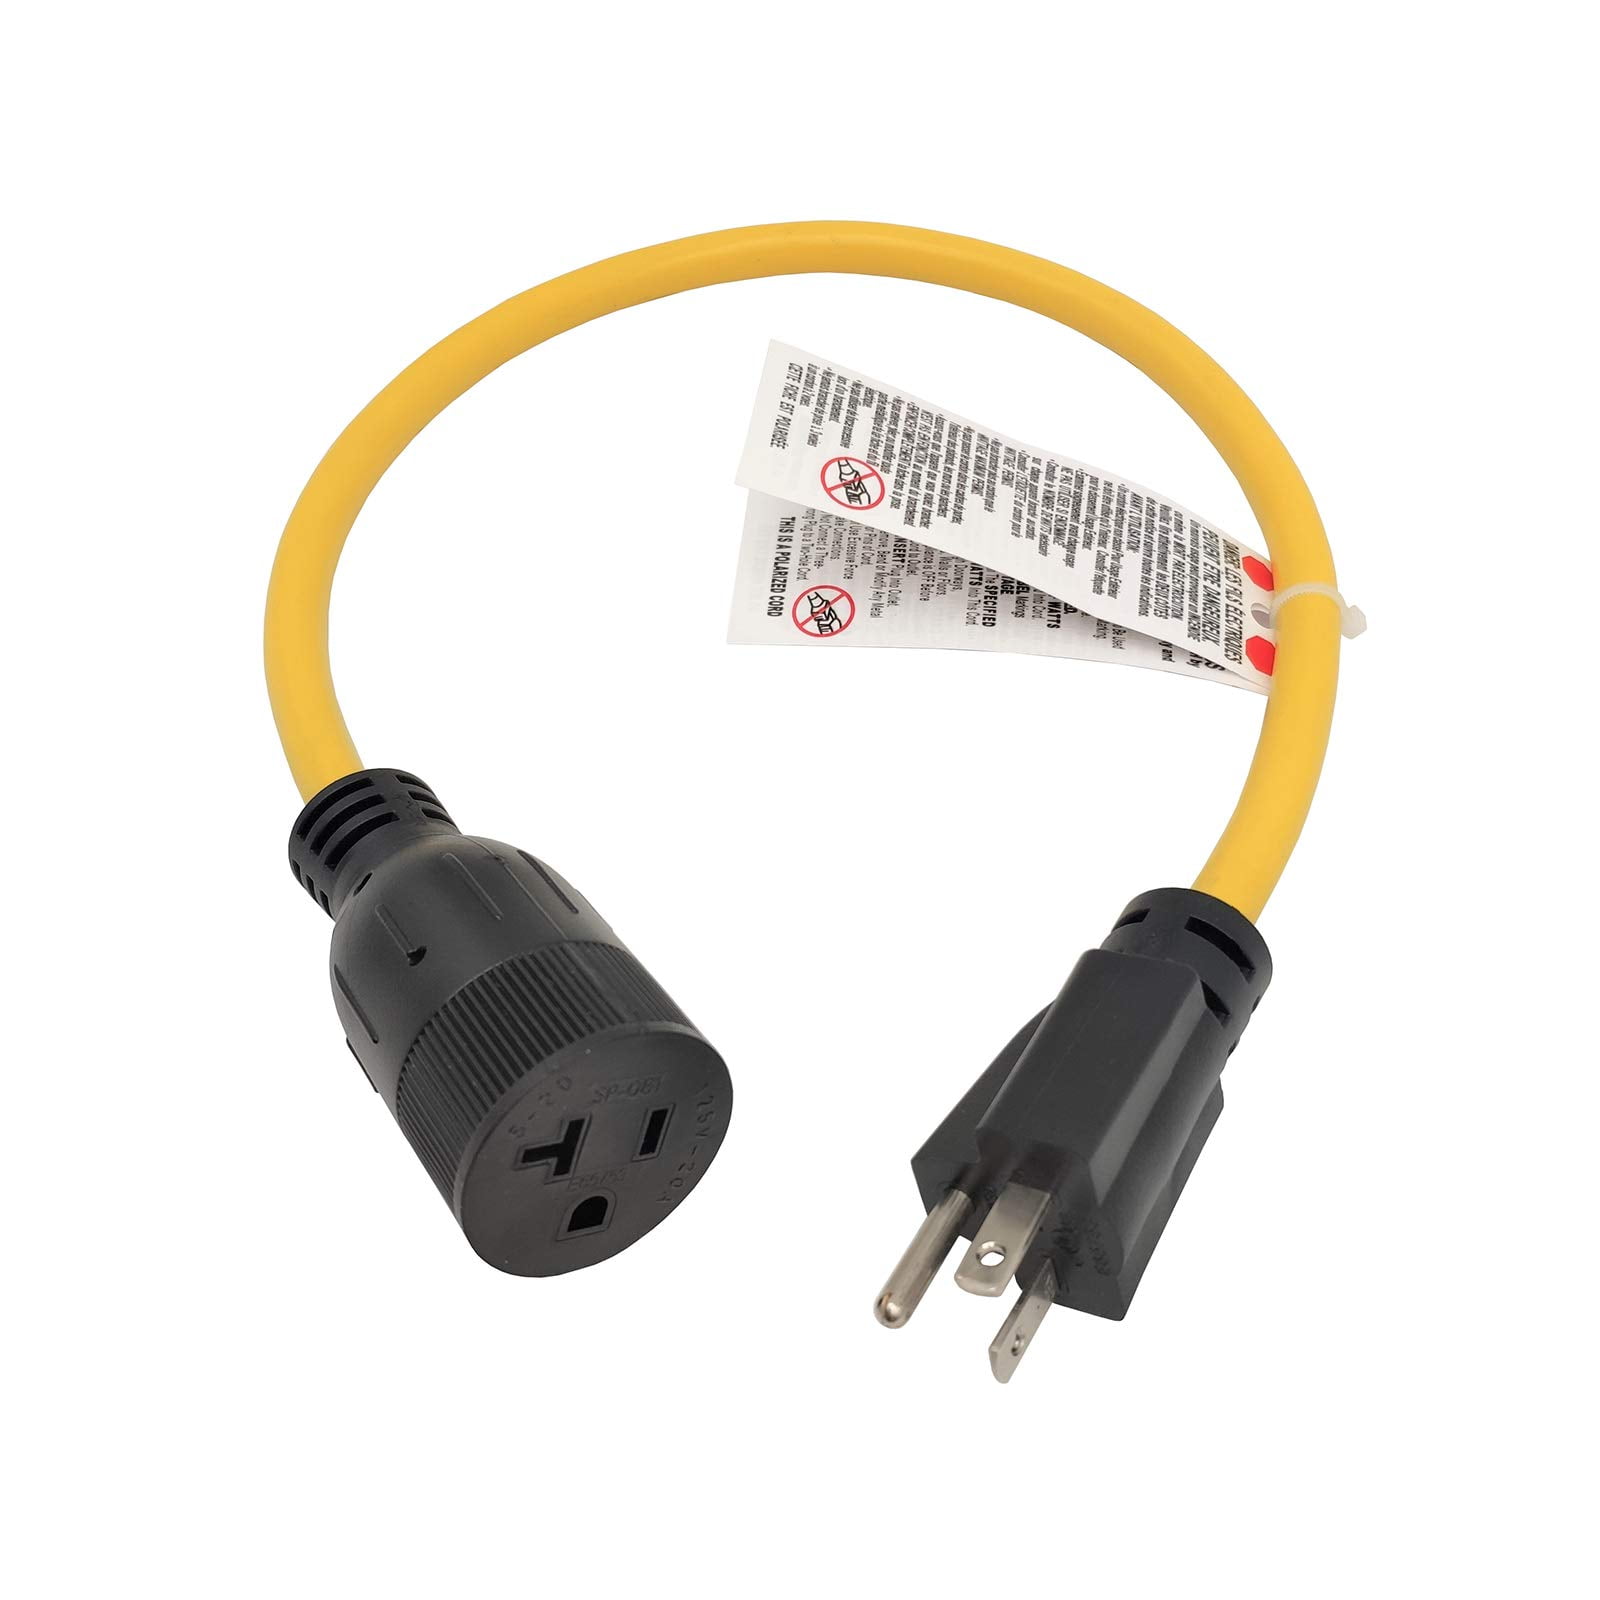 Nema 5-15R Receptacle 15A 125V Female Power Cable Connector Adap Plug Panel 